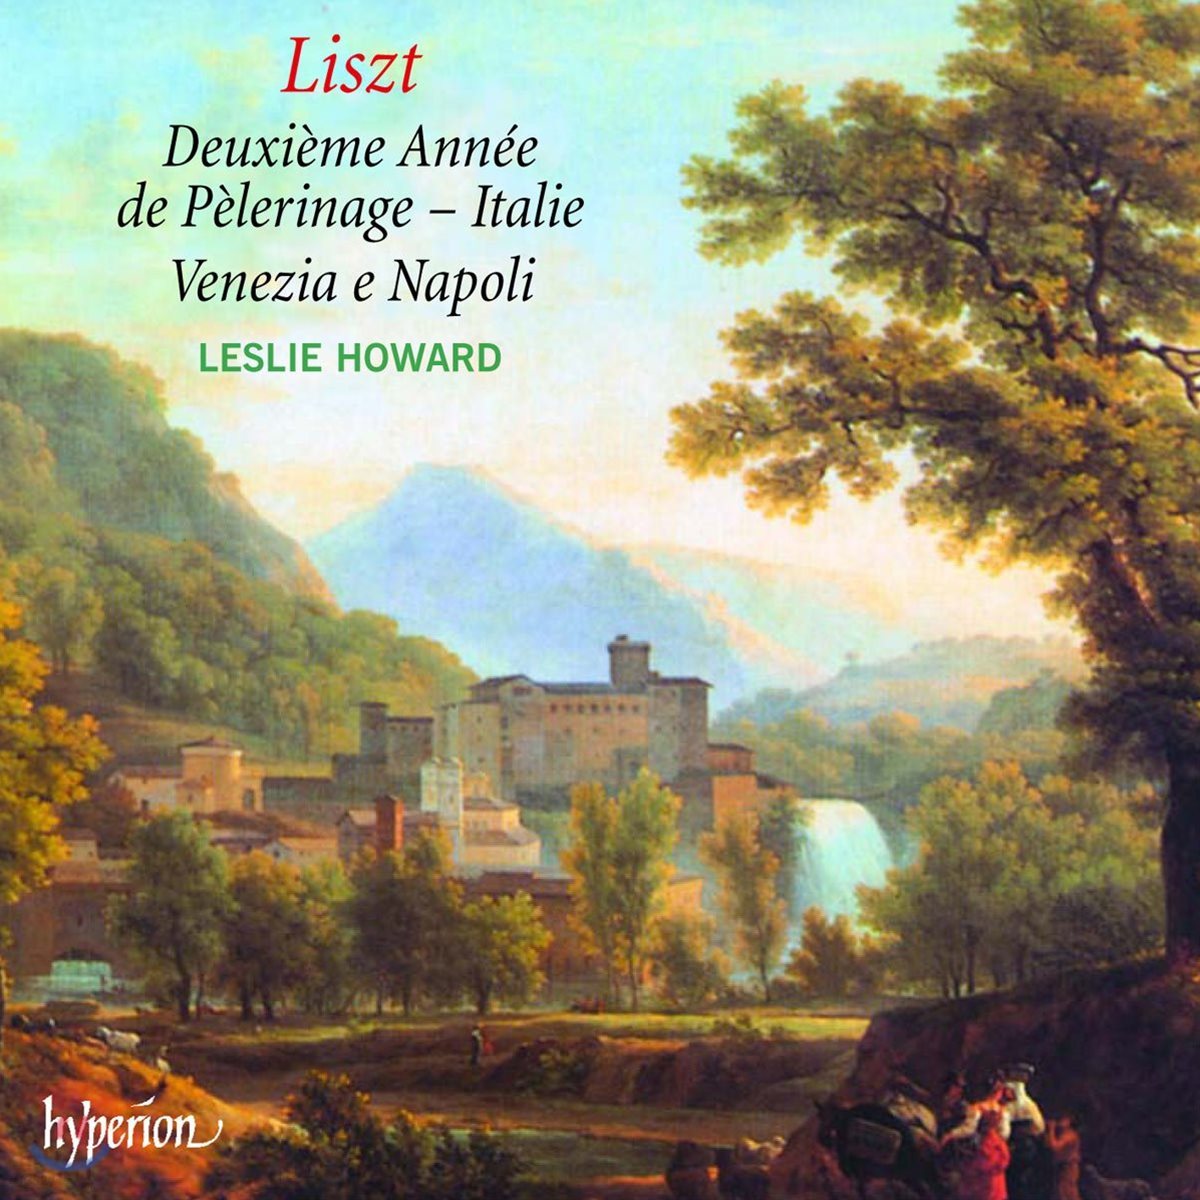 Leslie Howard 리스트 : 순례의 해 (이태리편), 베네치아와 나폴리 (Liszt: Complete Music for Solo Piano 43)